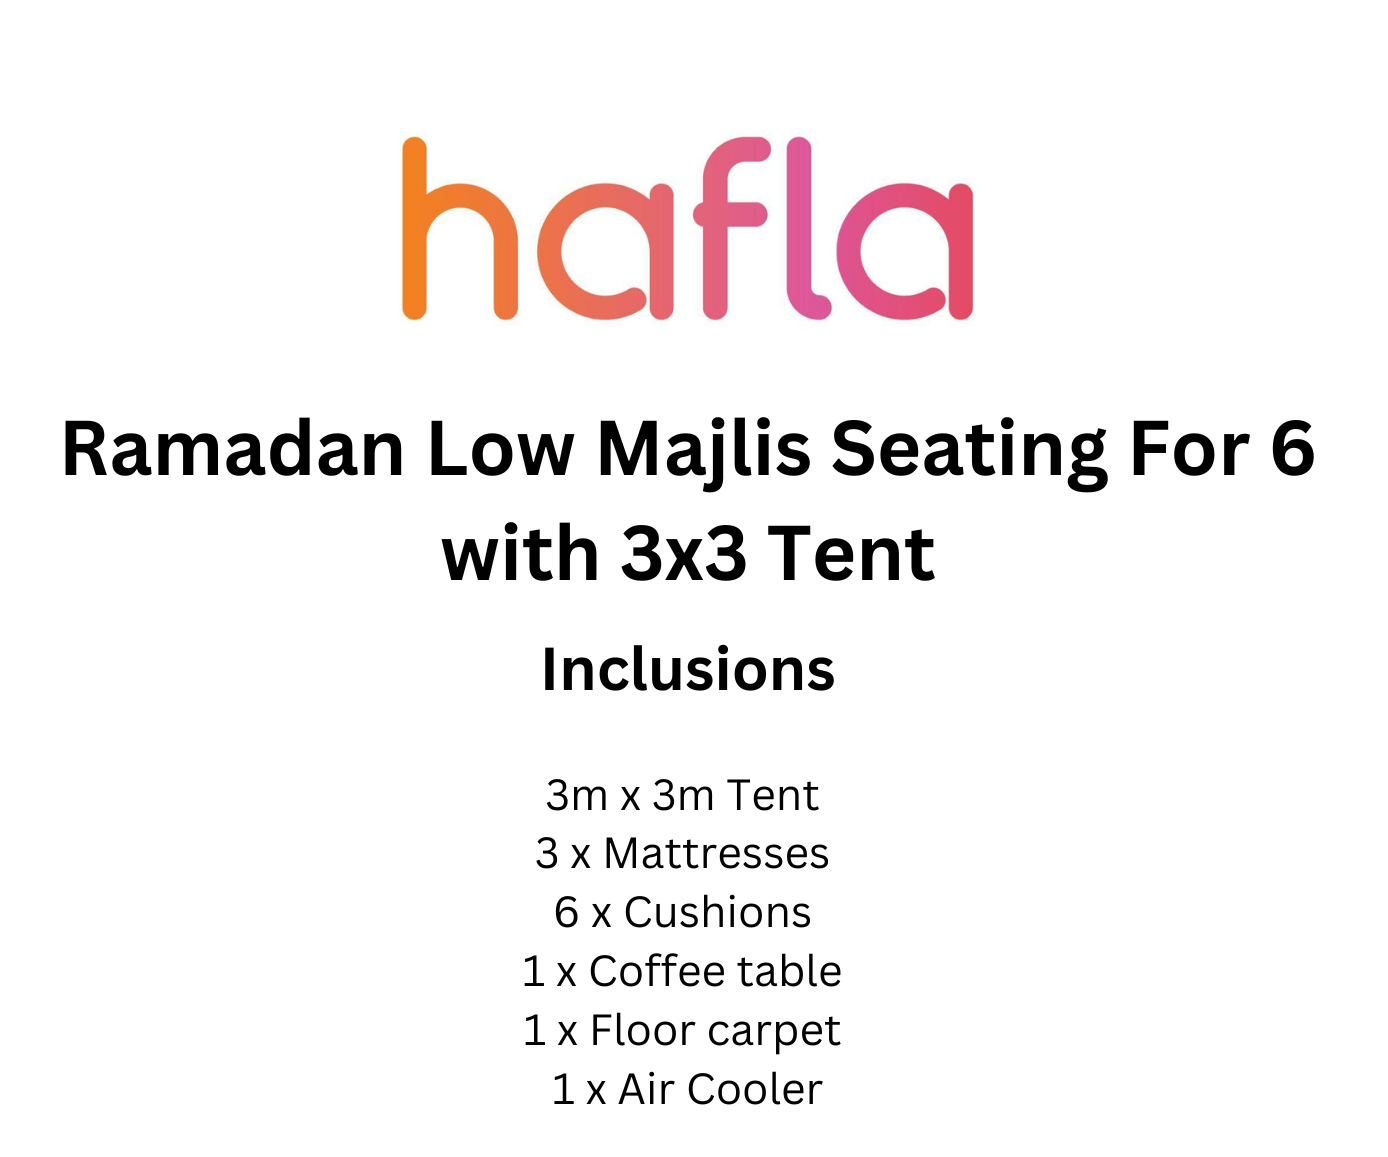 Ramadan Majlis Seating for 6 with 3x3 Tent